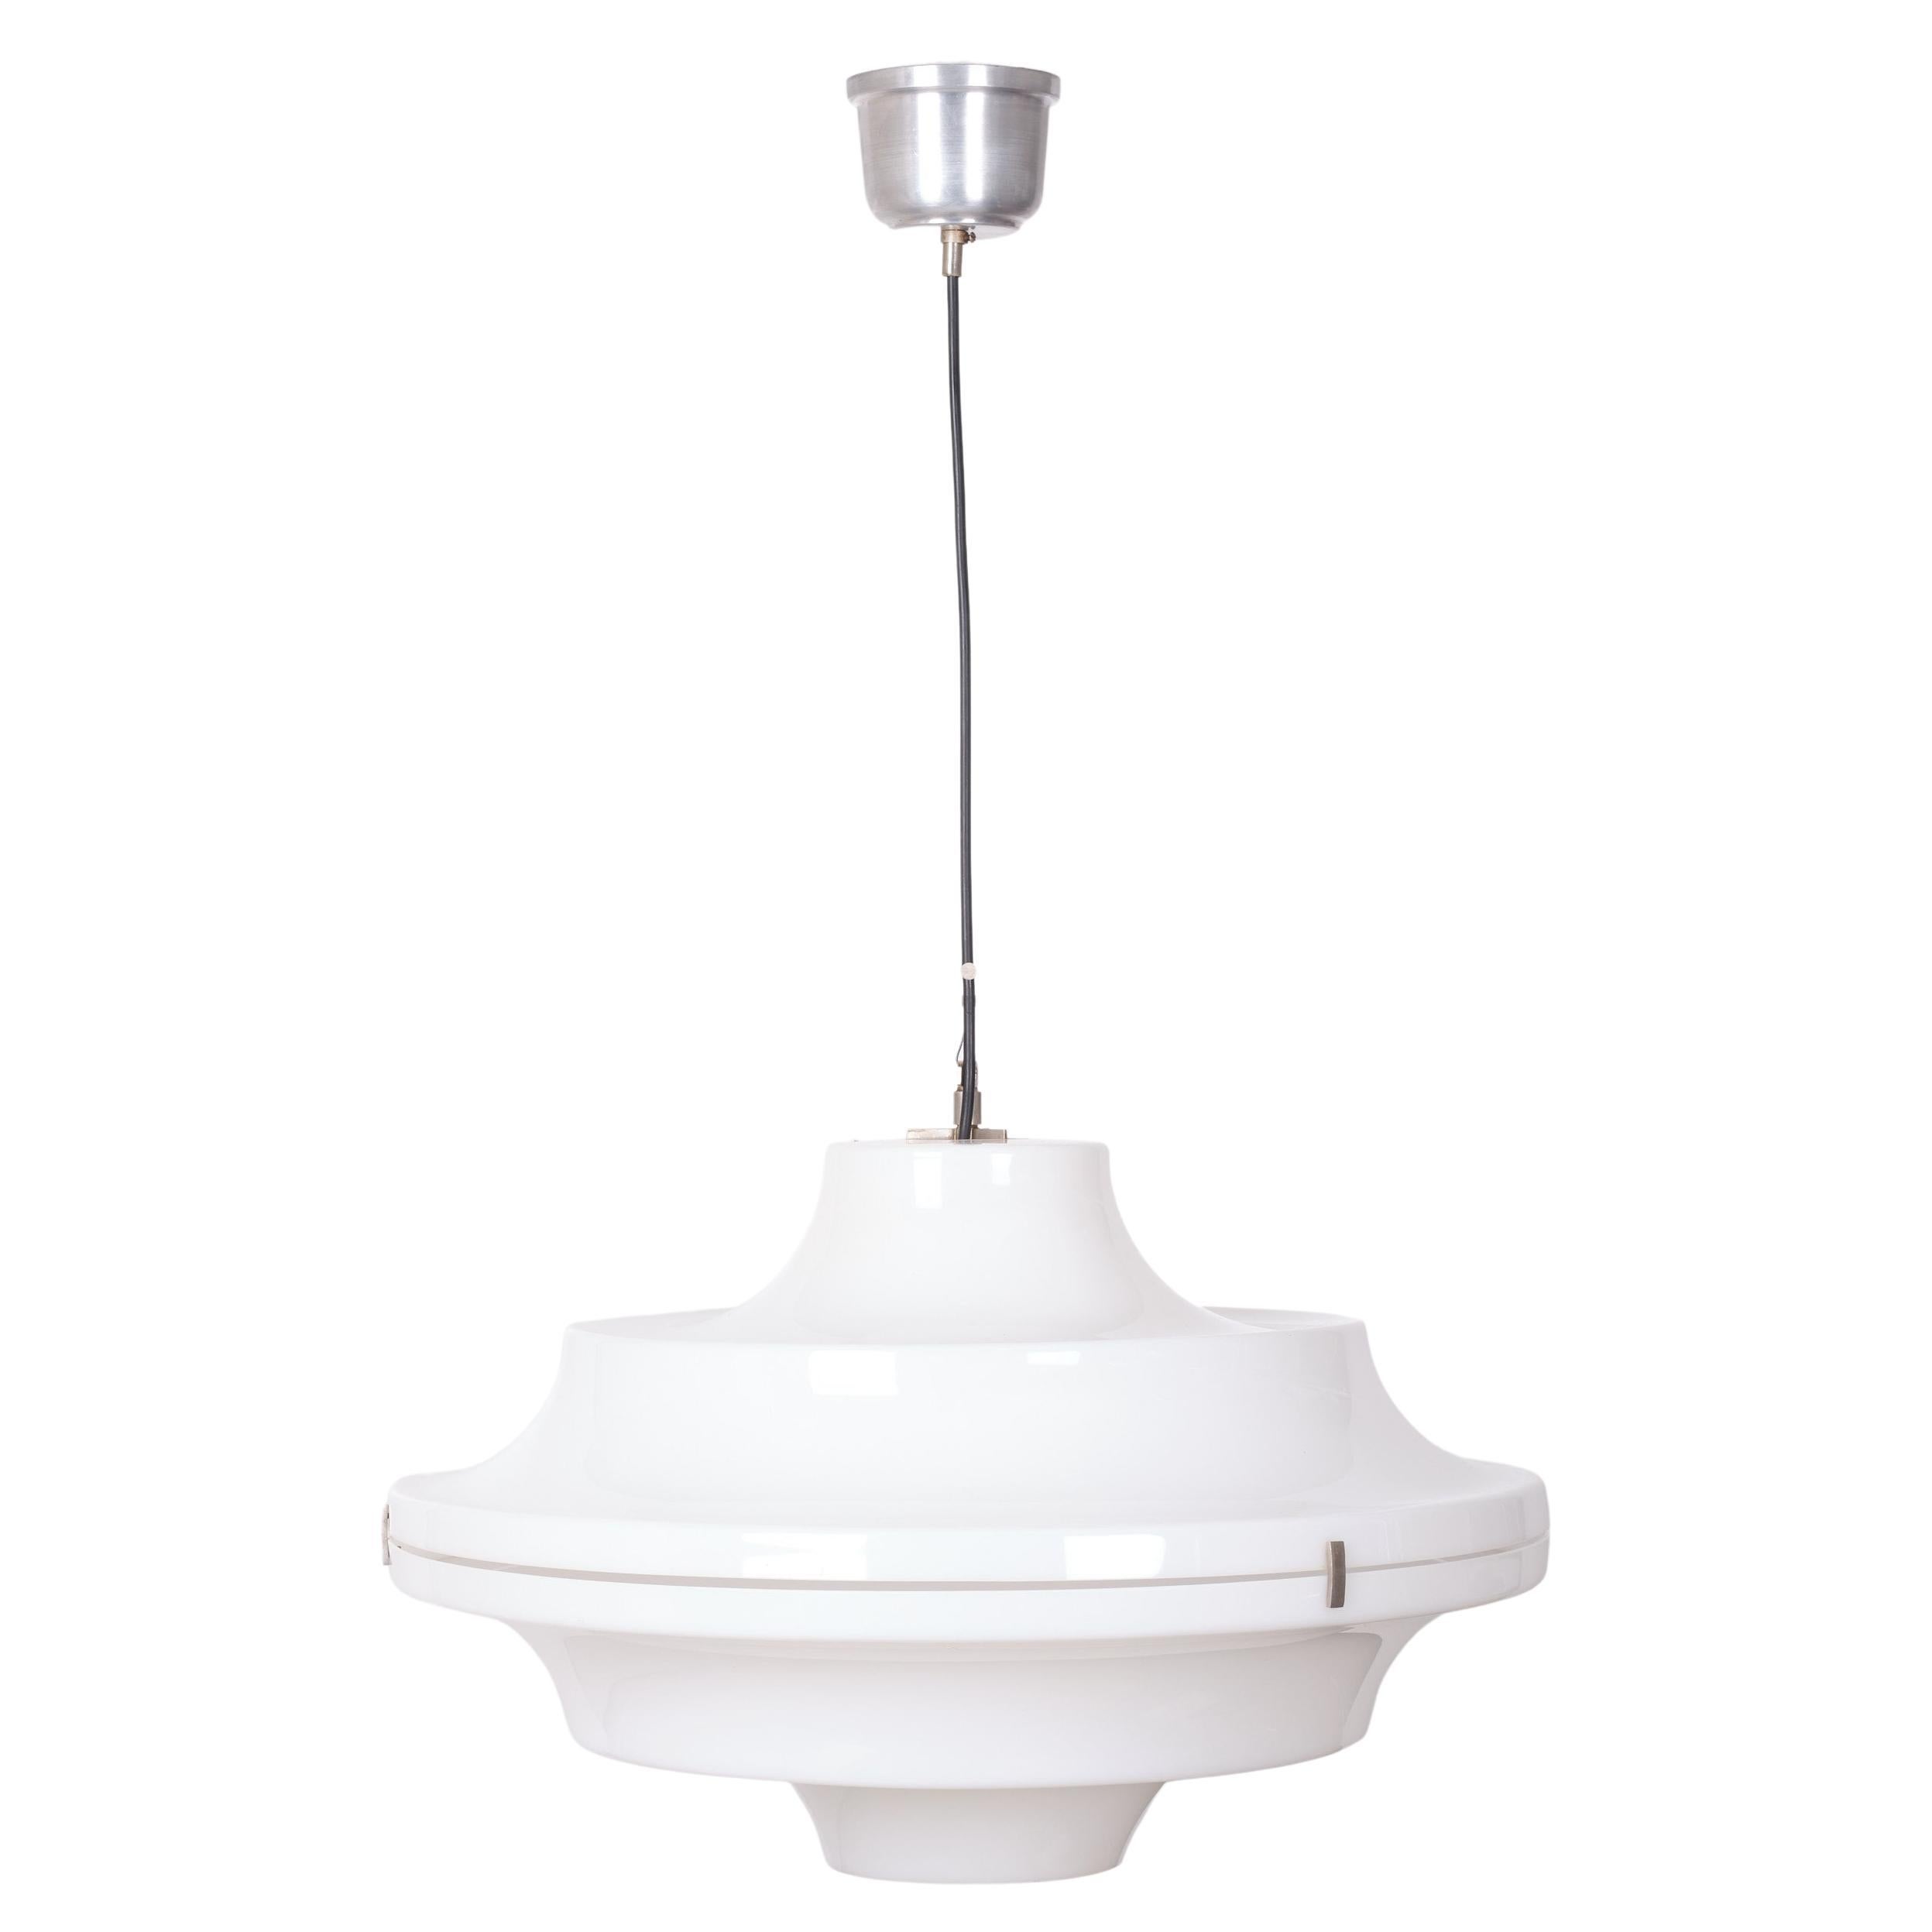 White Acrylic Ceiling Lamp Yki Nummi Style 1970s Italy For Sale